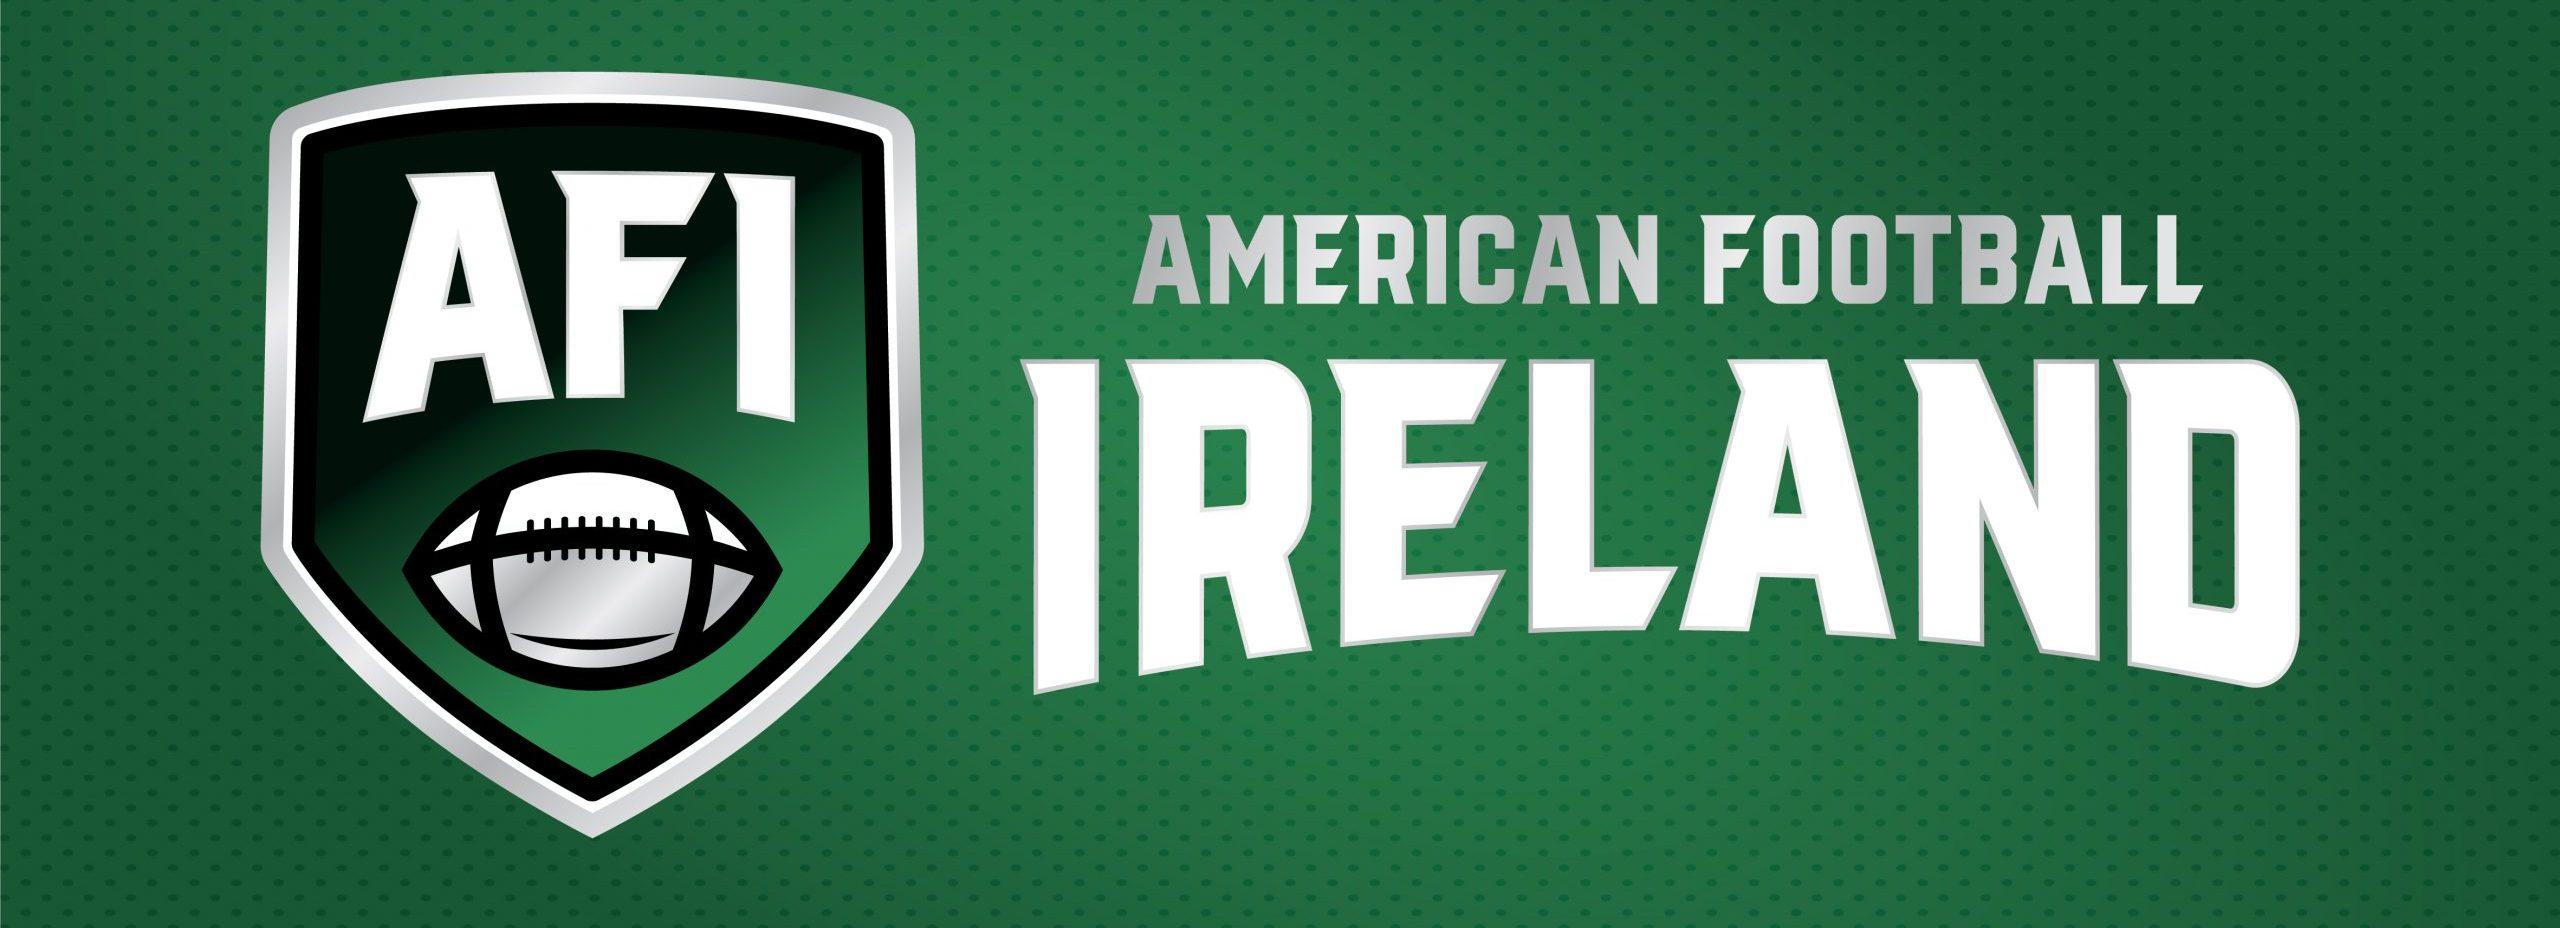 American Football American Football Ireland